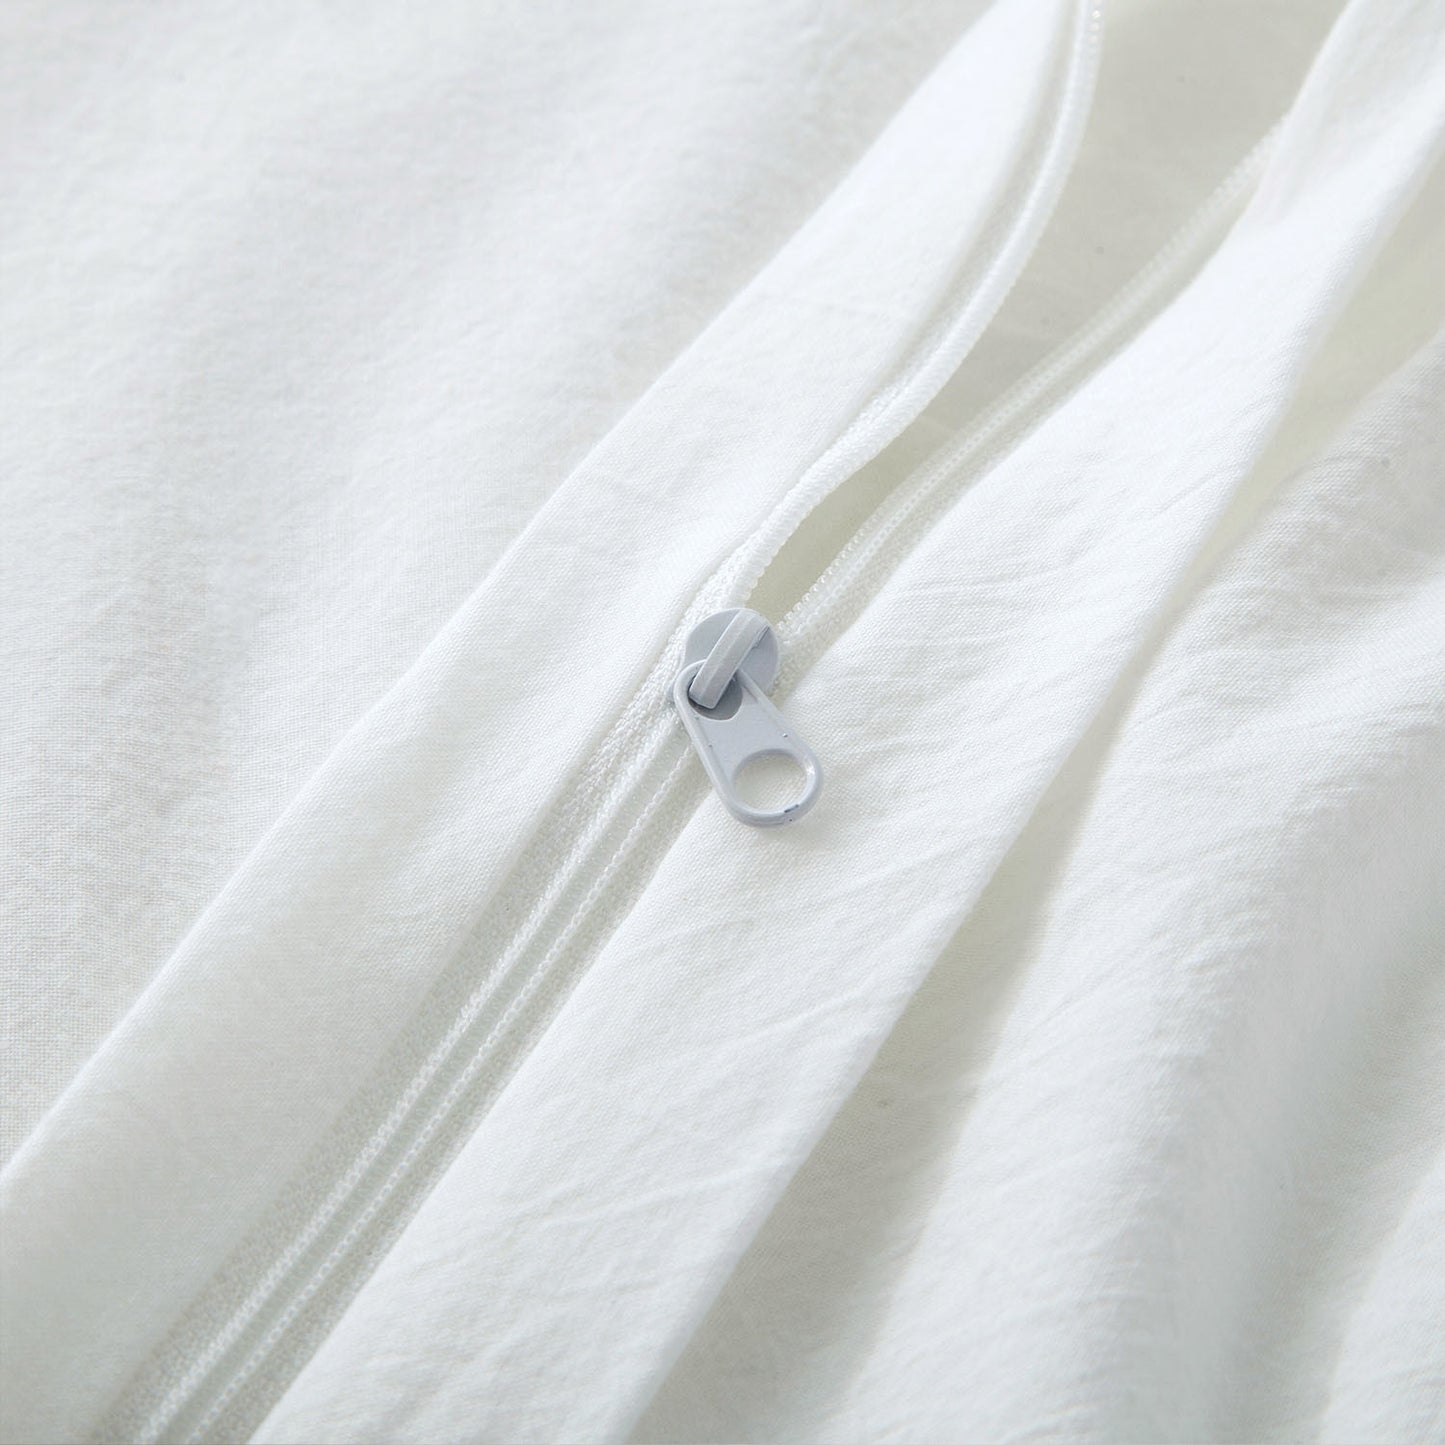 100% Washed Cotton Duvet Cover Set, Durable Fade-Resistant Natural Bedding Set (No Comforter)